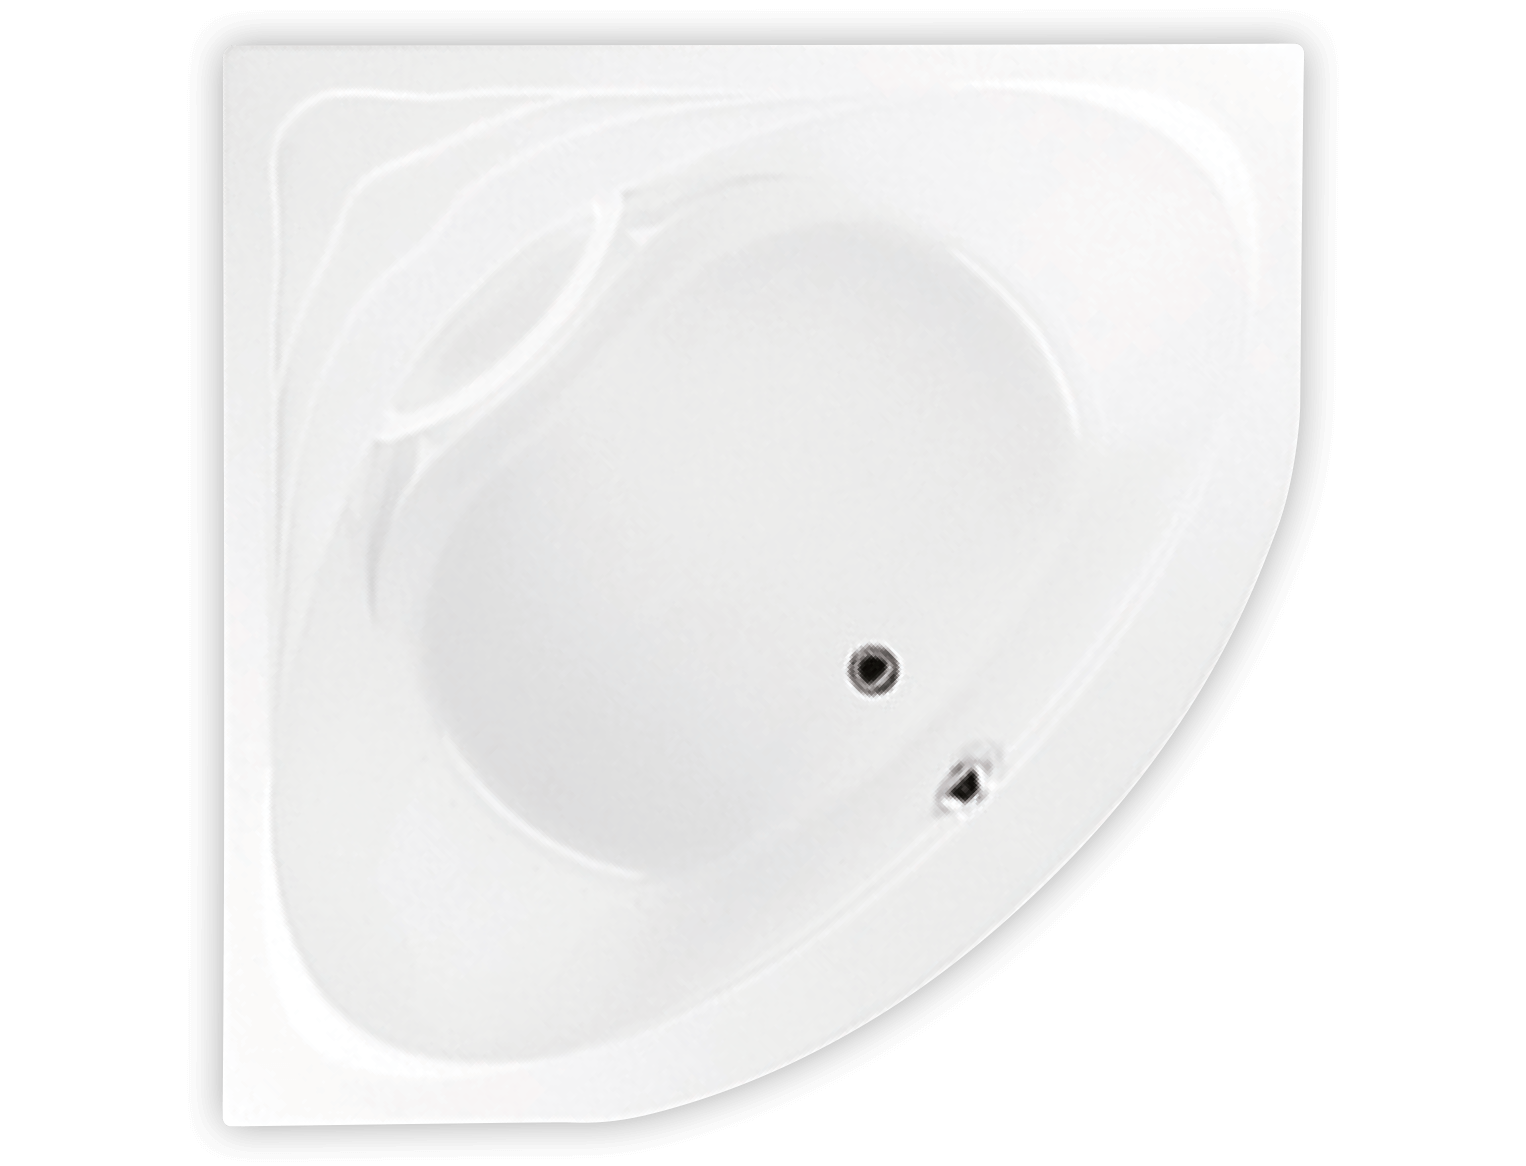 Bainultra Sensation corner drop-in air jet bathtub for your modern bathroom